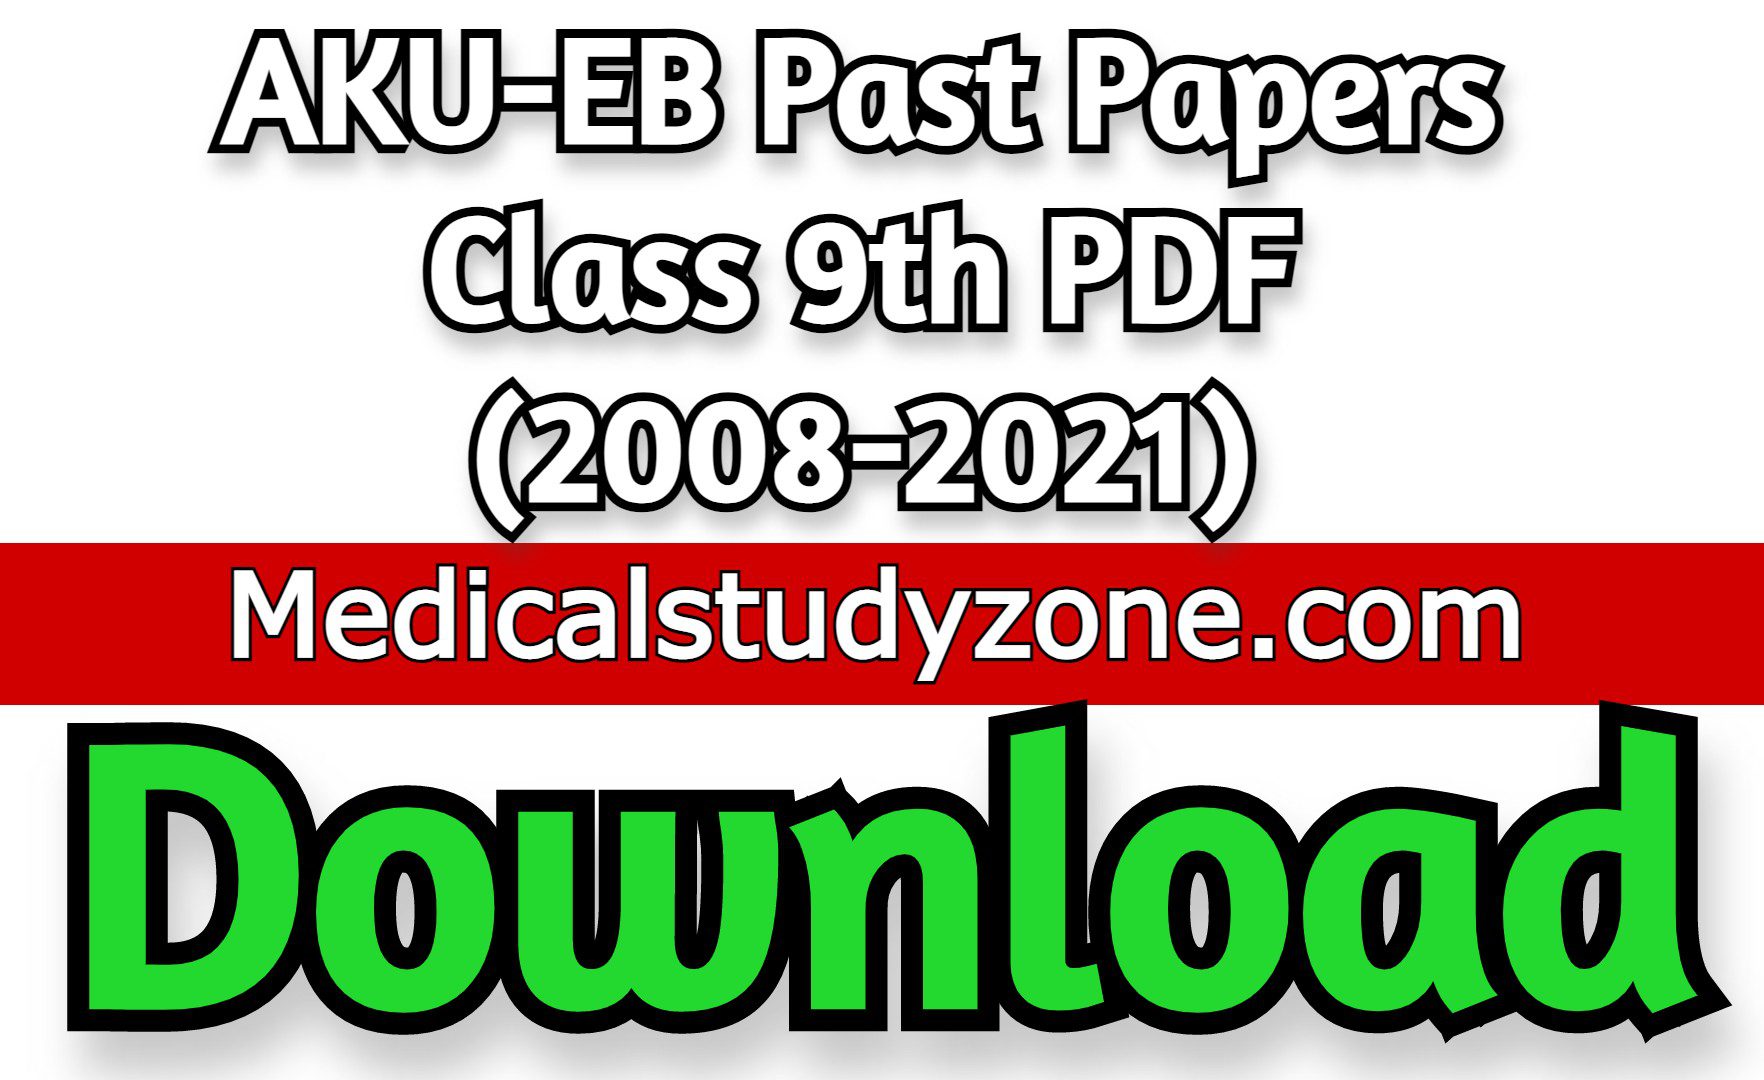 AKU-EB Past Papers Class 9th PDF (2008-2021) Free Download